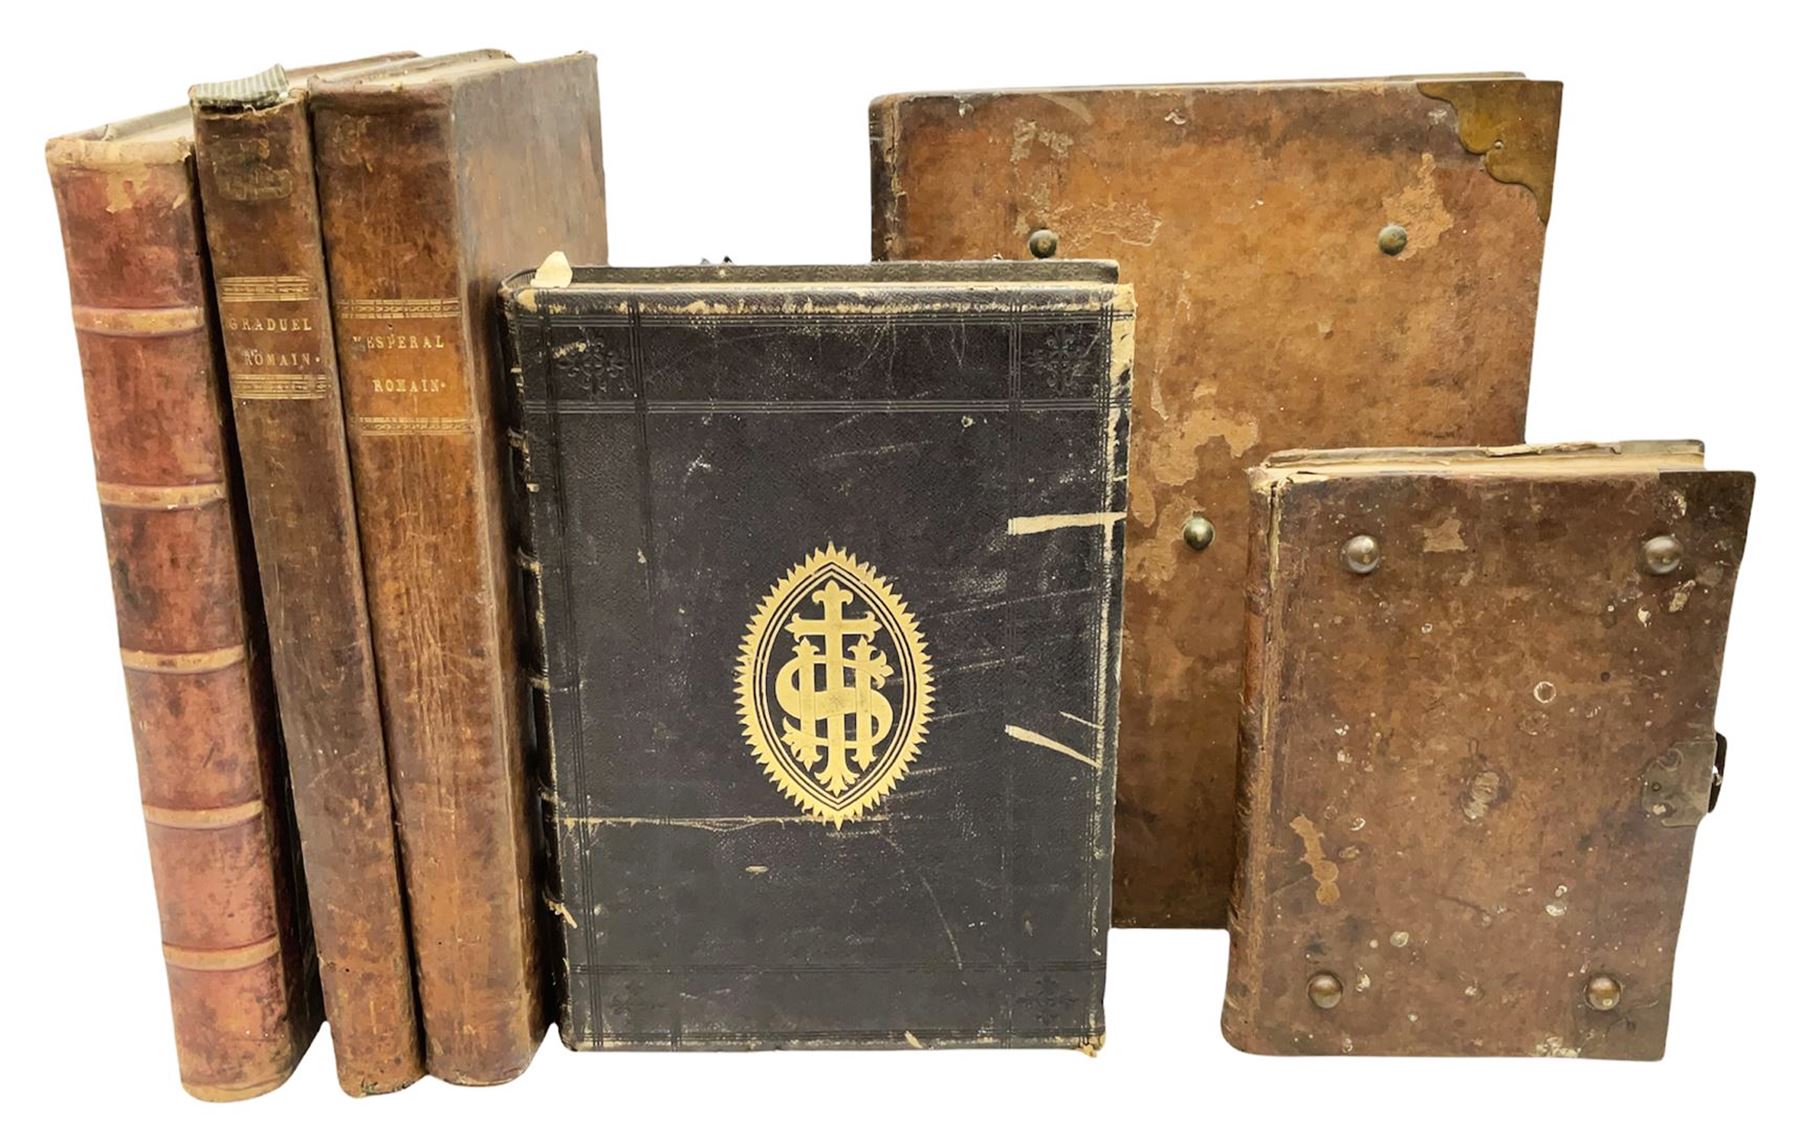 Six 19th century leather bound books of music comprising Graduale Juxta Missale Romanum and Antiphon